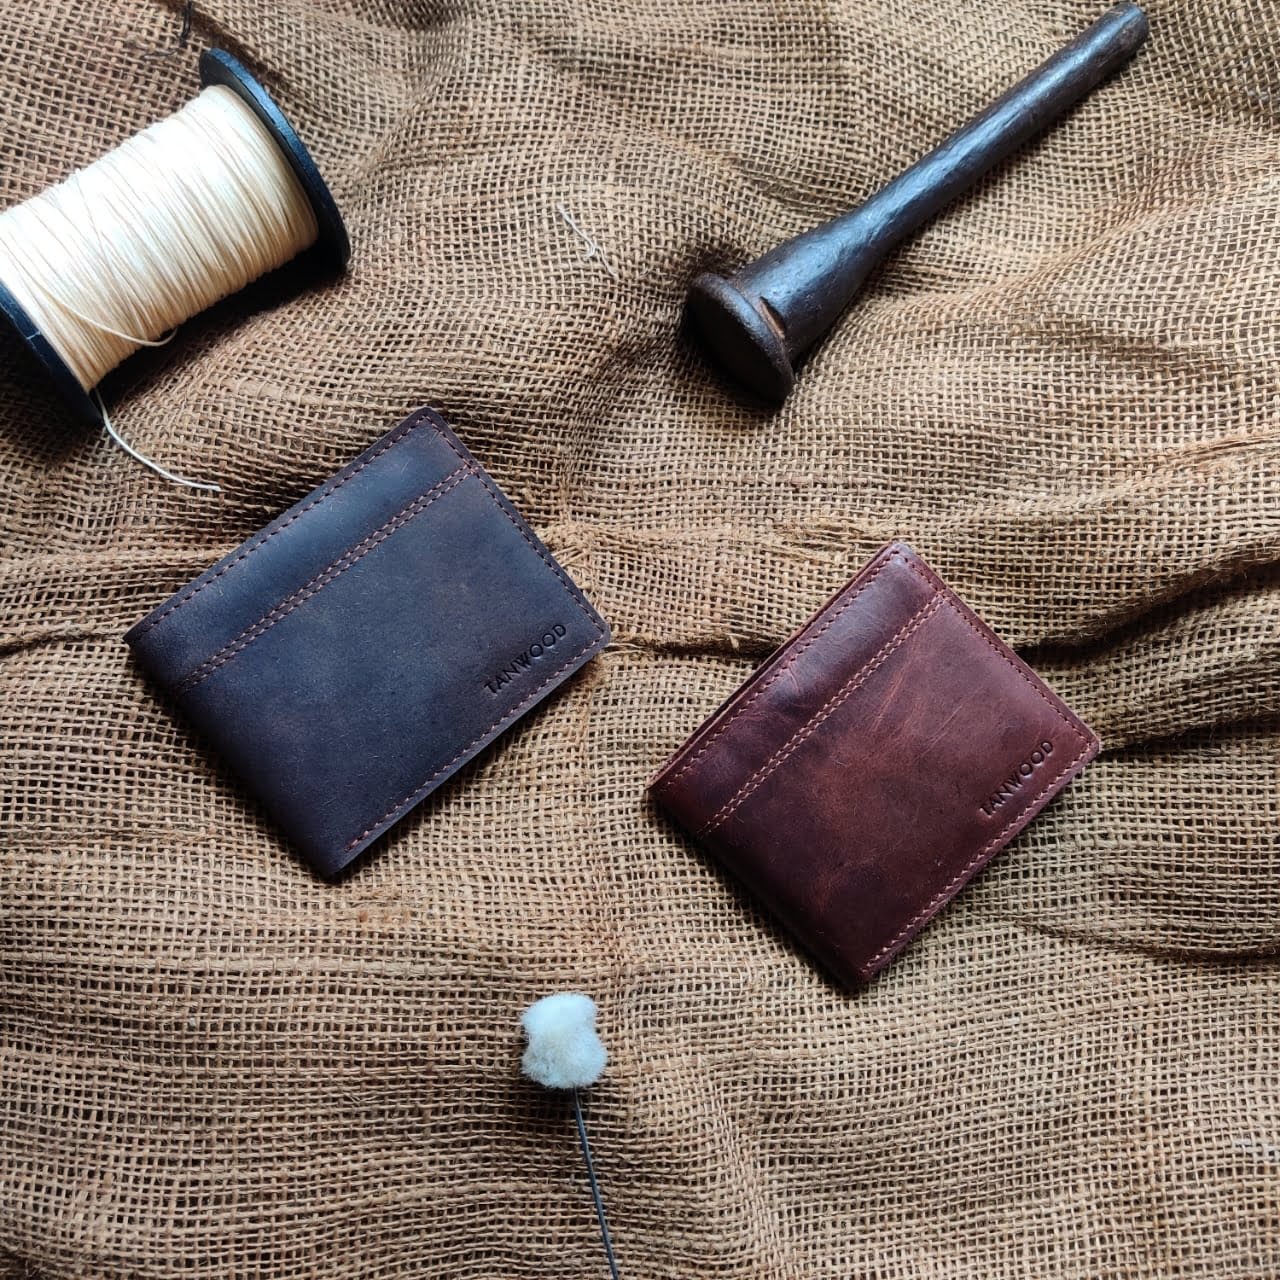 tanwood leather